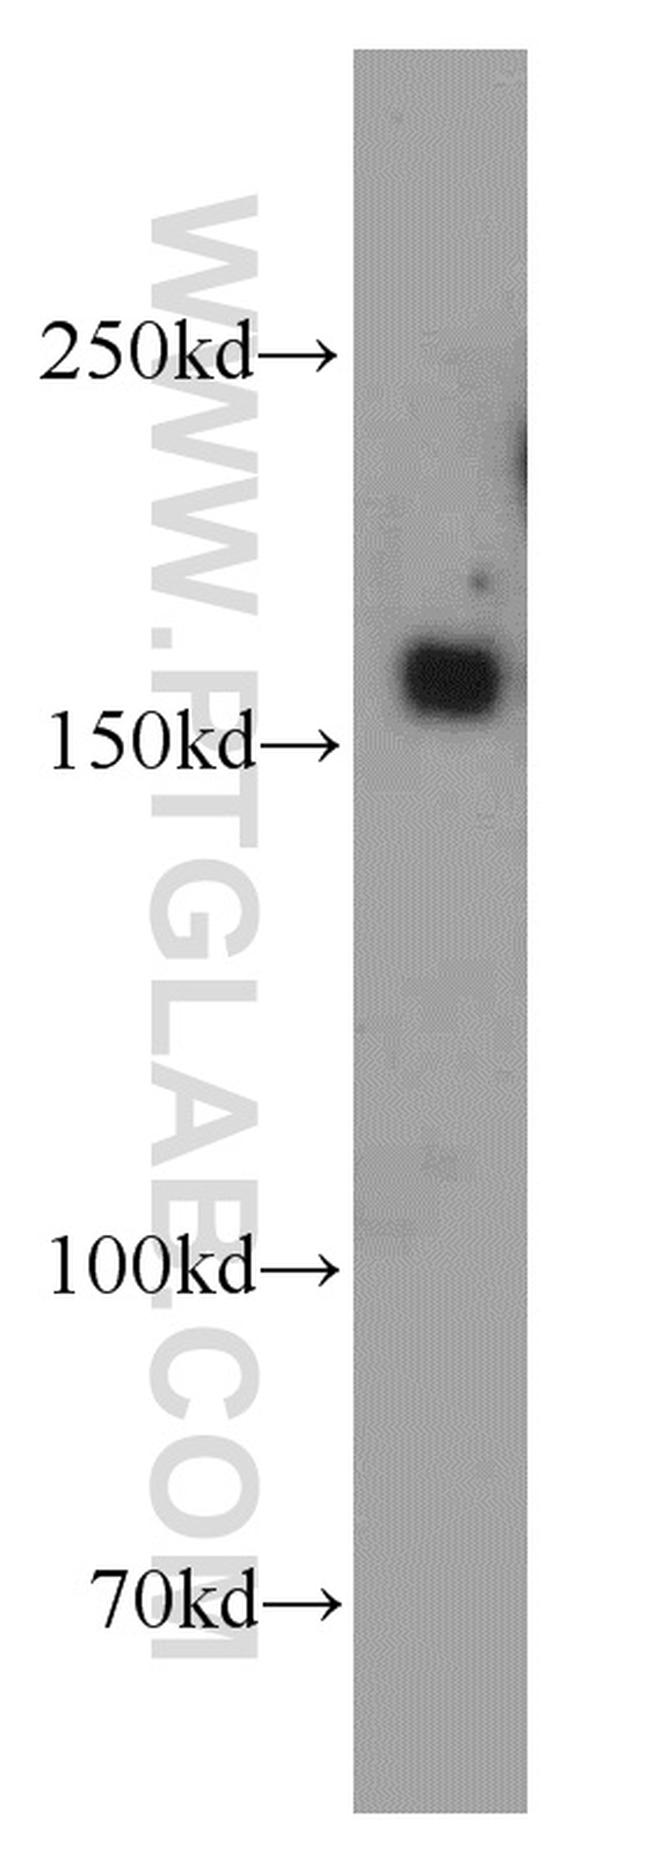 FGD5 Antibody in Western Blot (WB)